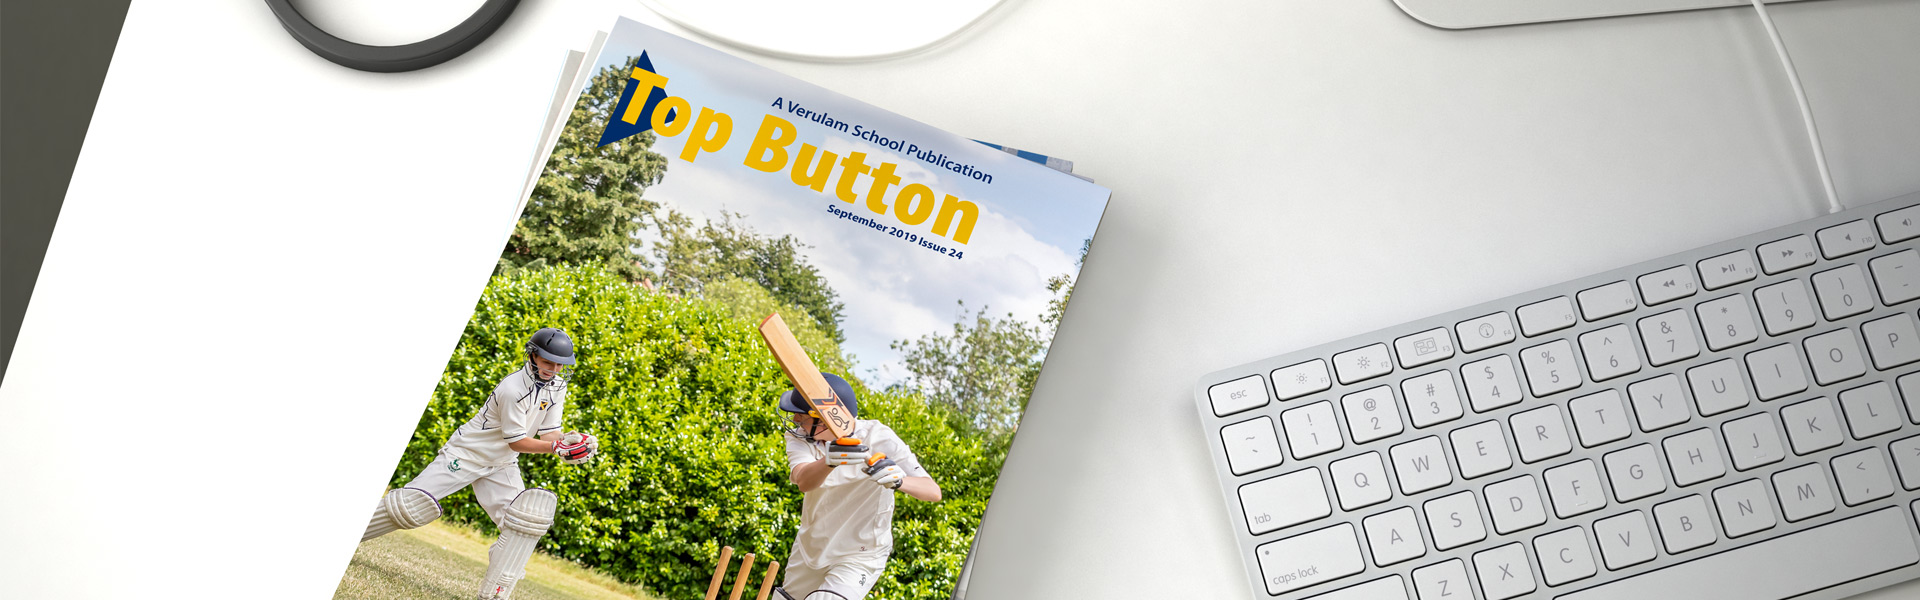 top button magazine sitting next to keyboard on desk